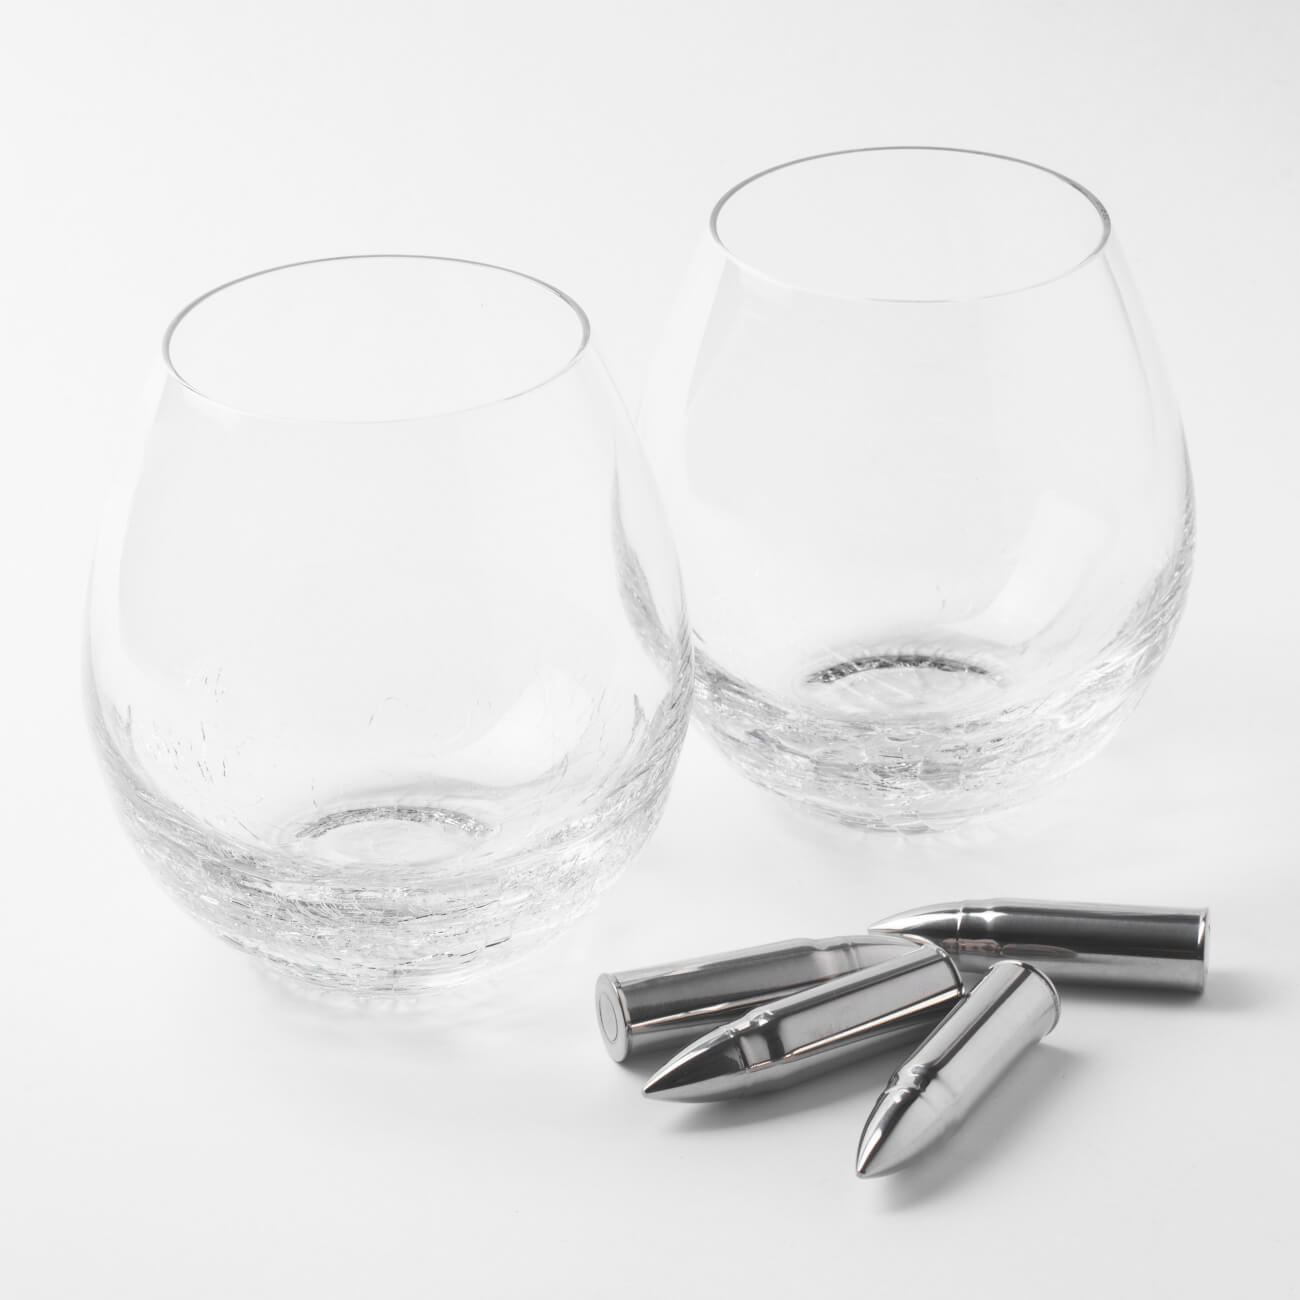 Набор для виски, 2 перс, 6 пр, стаканы/кубики, стекло/сталь, Кракелюр, Пули, Bullet набор для виски 2 перс 6 пр стаканы кубики стекло р мрамор zero